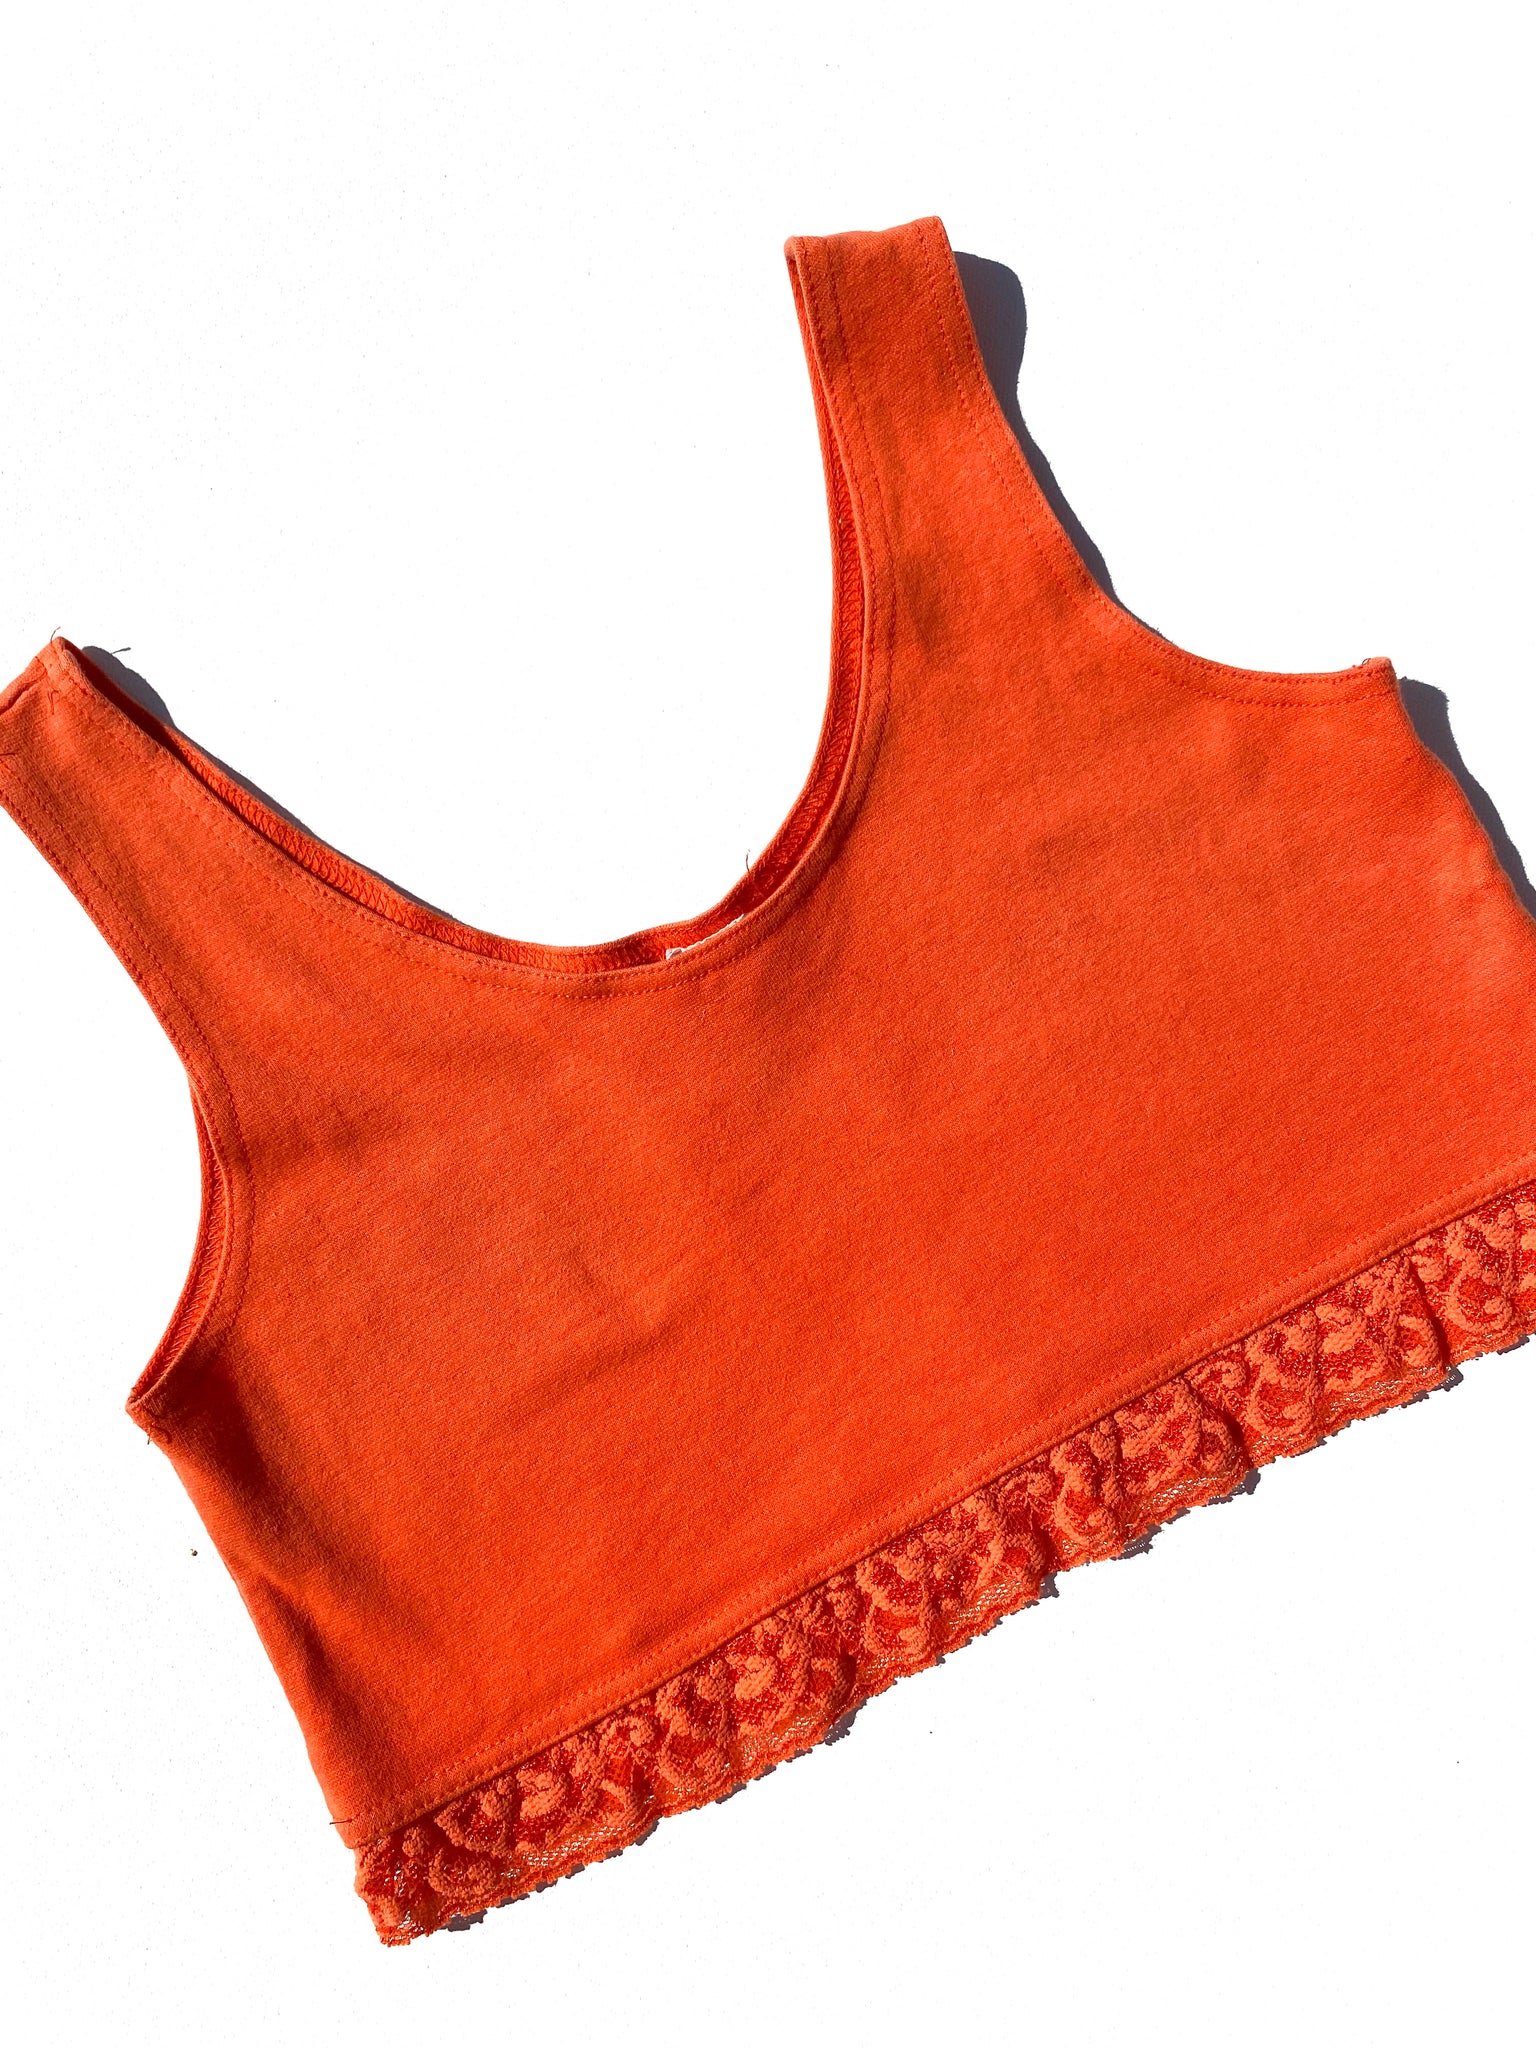 VINTAGE: Crop Top - Orange Lace